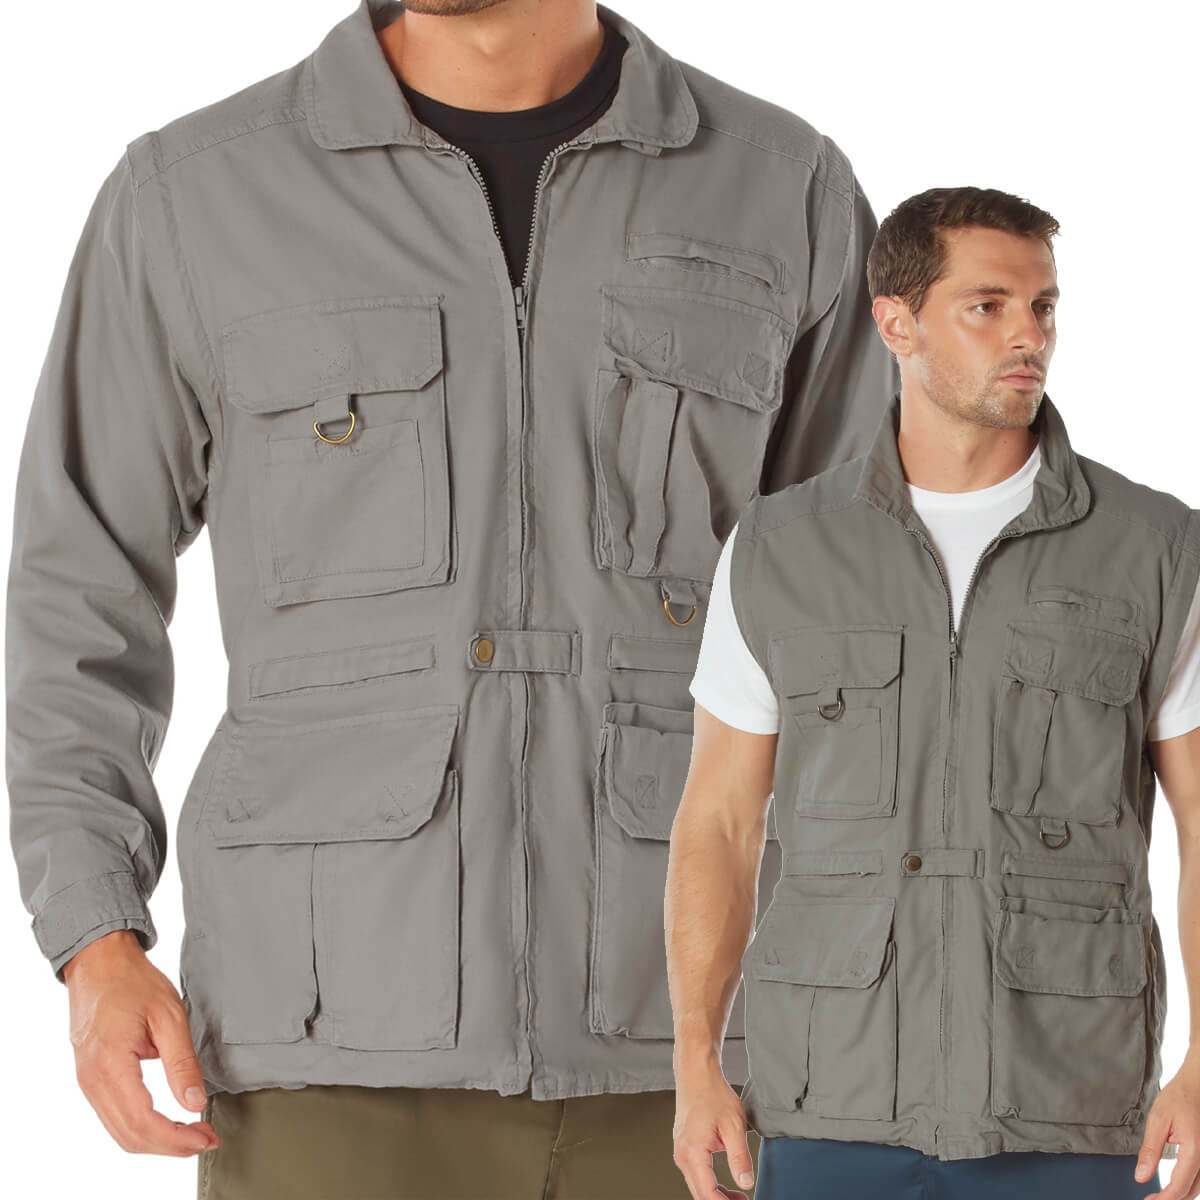 Convertible Safari Jacket Converts From Jacket To Vest